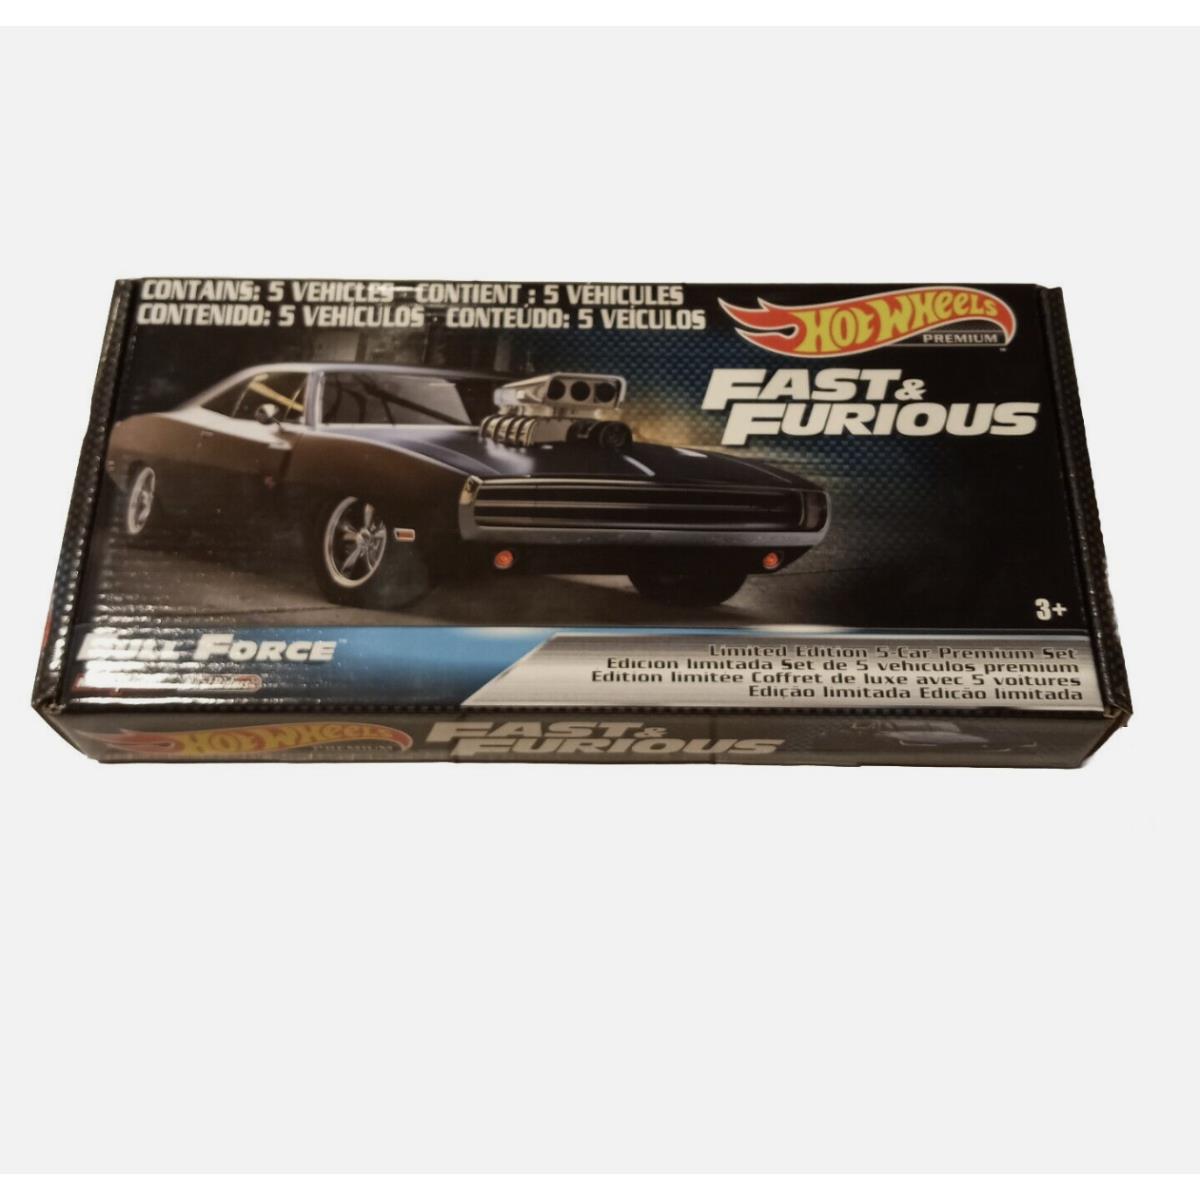 2020 Hot Wheels Premium Fast Furious Box Set Full Force 5 Pack